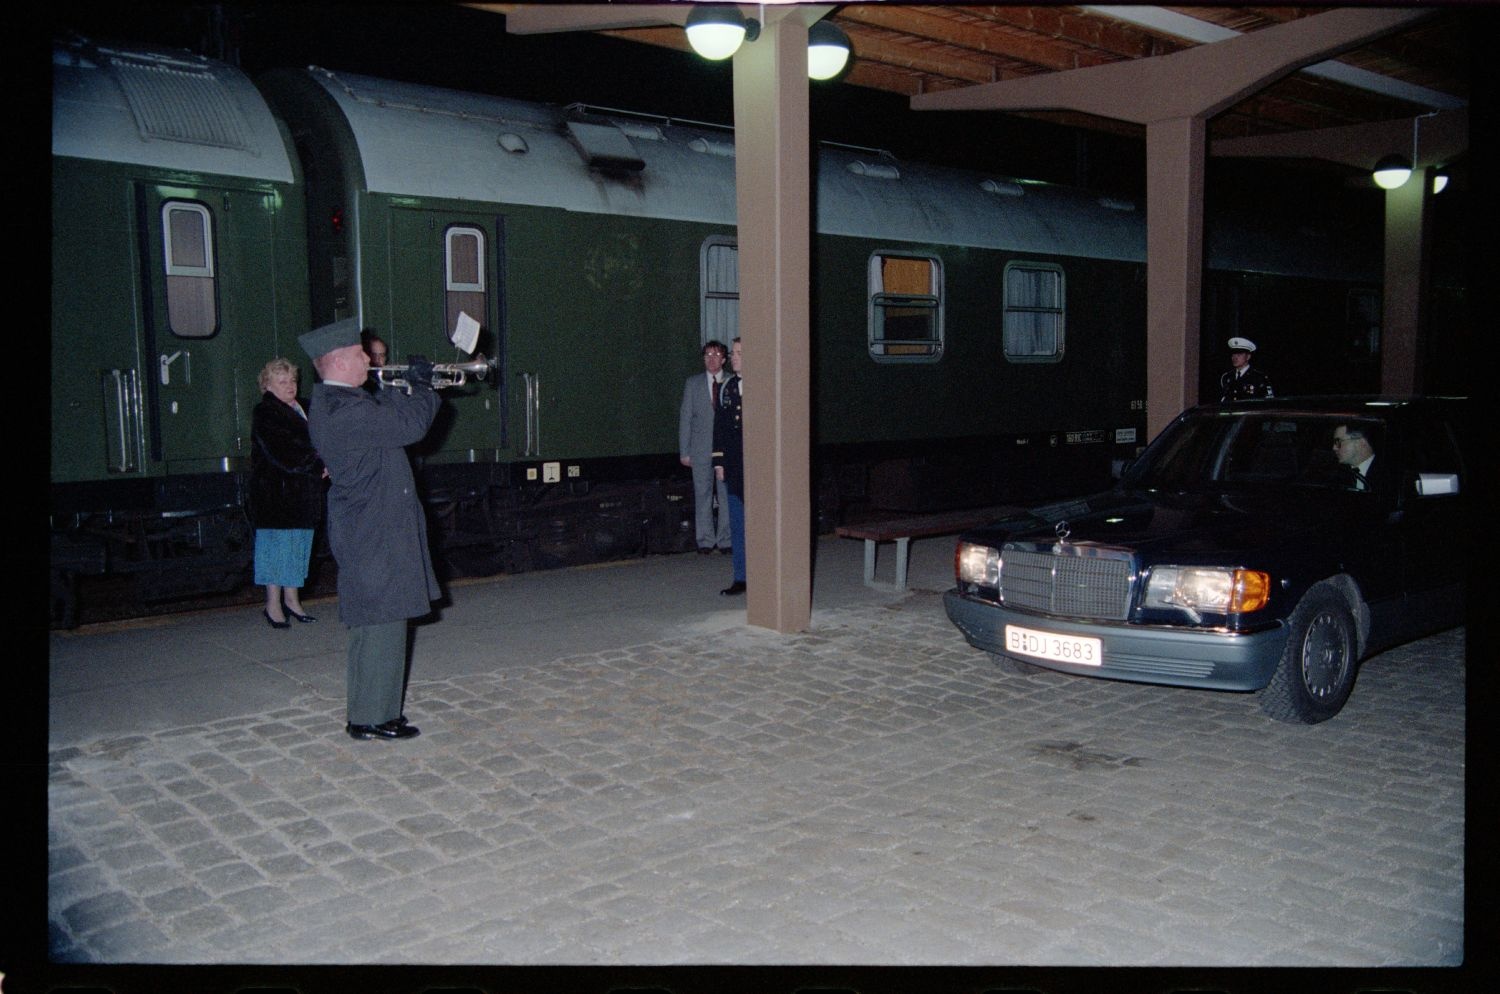 Fotografie: Abfahrt des letzten Duty Train des Railway Transportation Office aus Berlin (AlliiertenMuseum/U.S. Army Photograph Public Domain Mark)